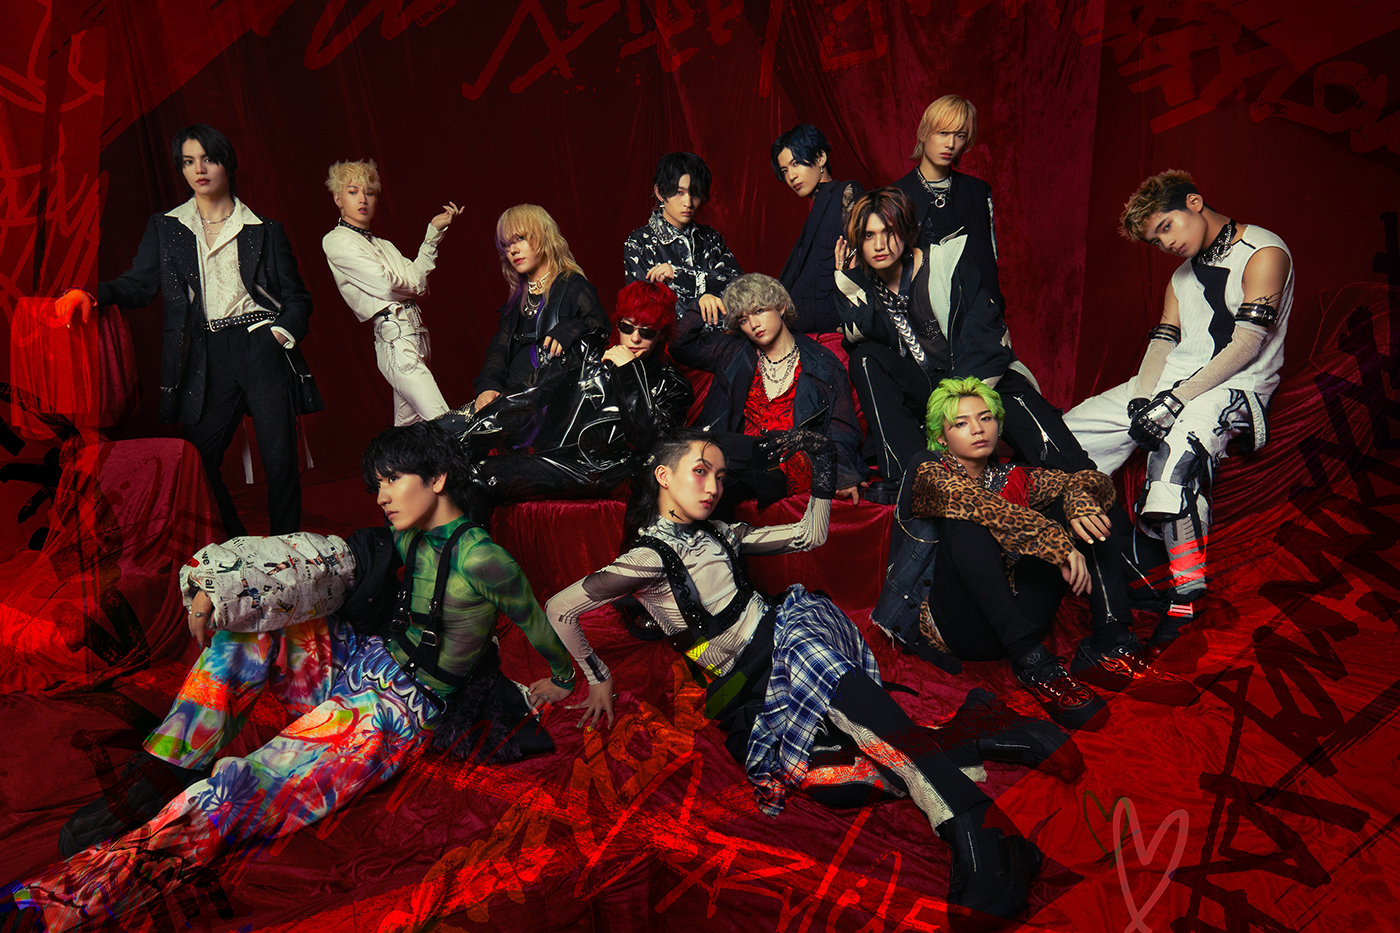 YOSHIKIプロデュースのボーイズバンド“XY”、デビュー曲「Crazy Love」のMVプレミア公開が決定